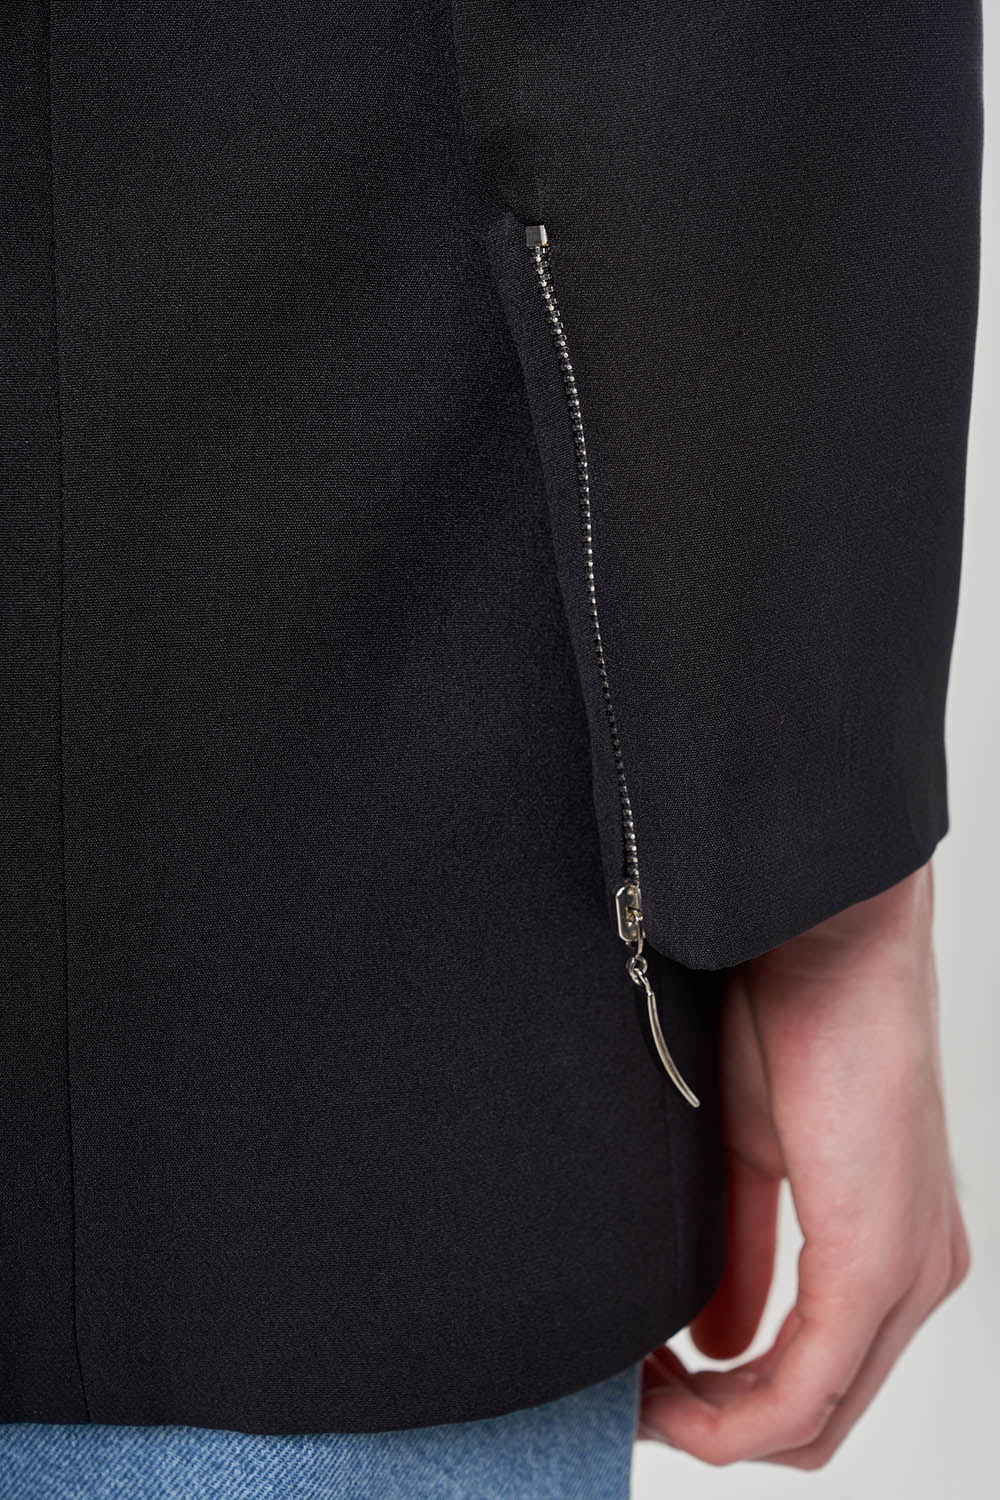 Zipper Detailed Black Jacket